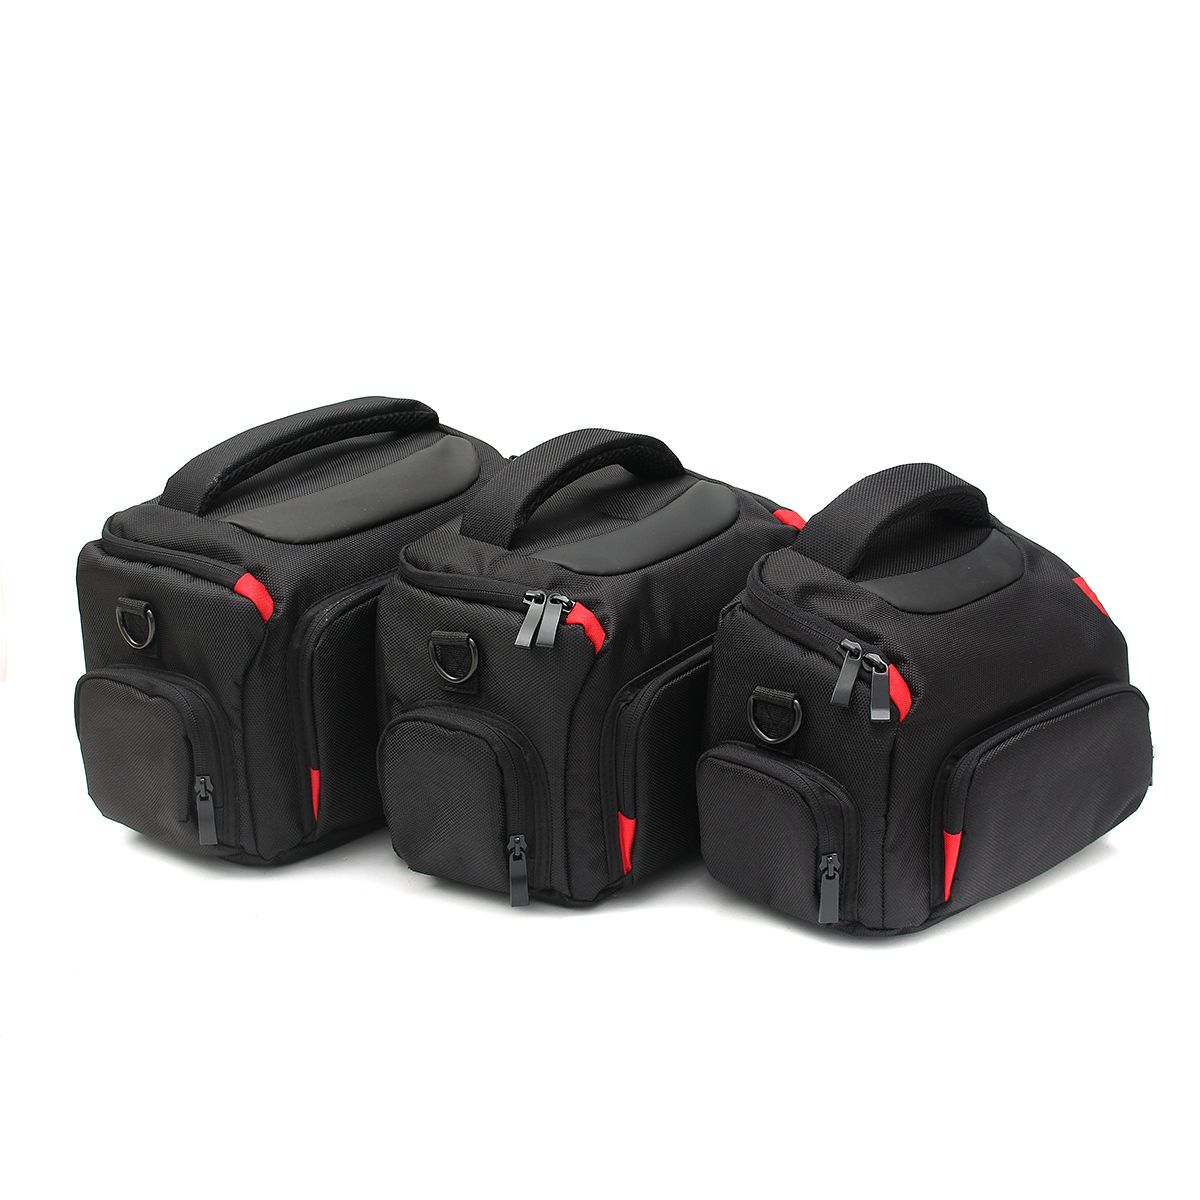 Camera-Storage-Travel-Carry-Bag-with-Rain-Cover-Strap-for-DSLR-SLR-Camera-Camera-Lens-Flash-1632987